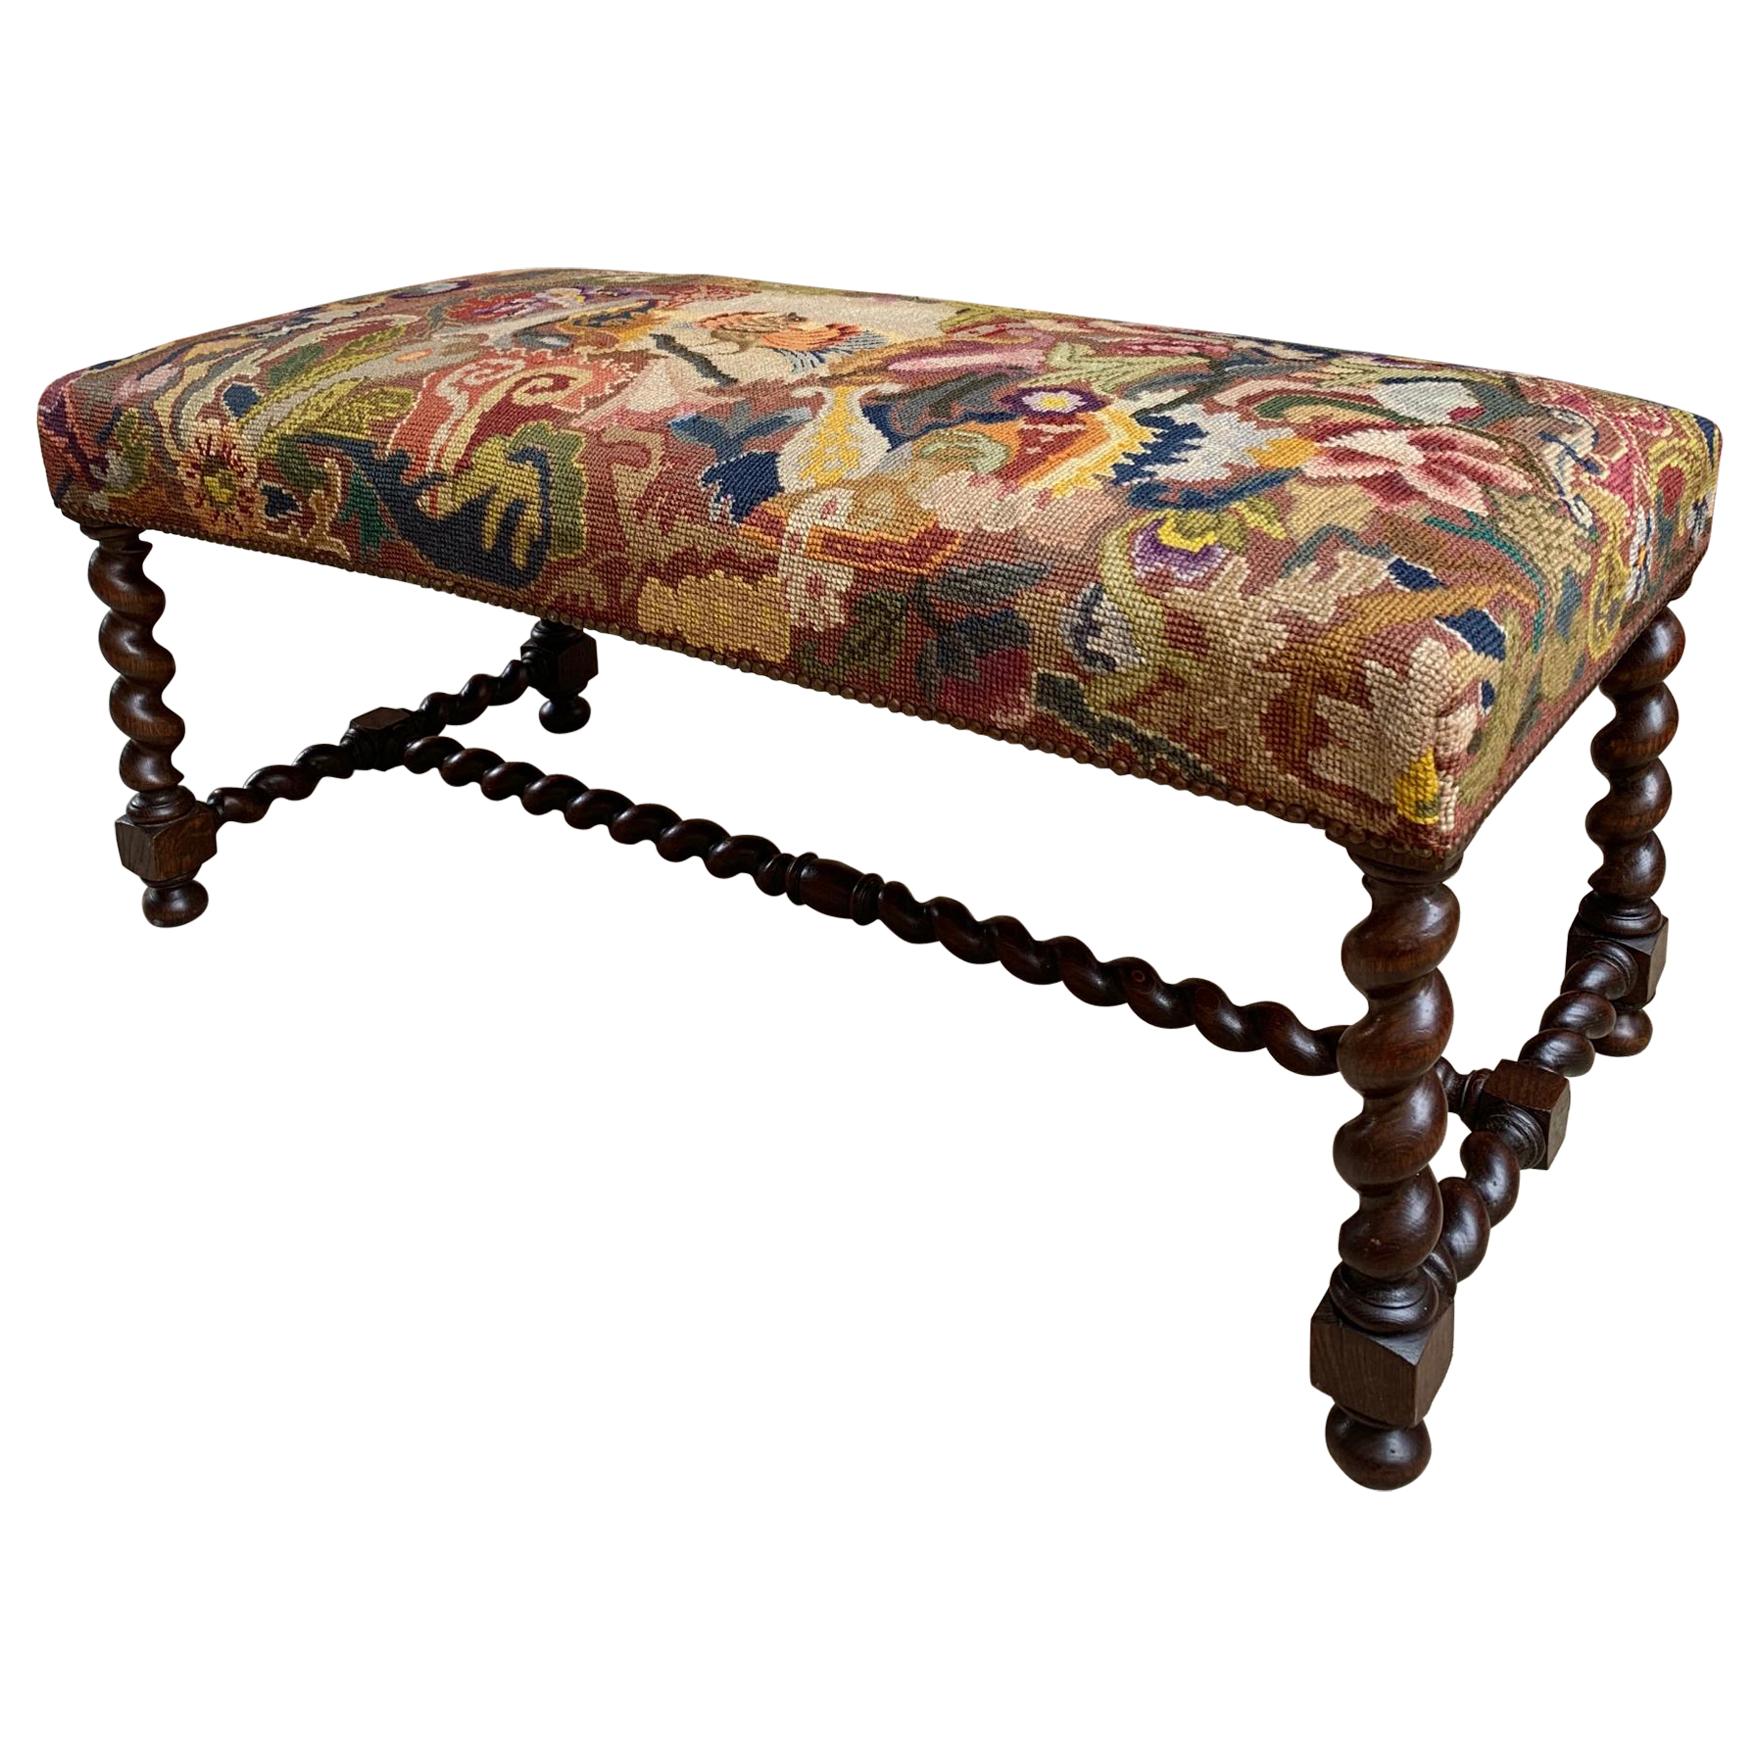 Antique French Oak Barley Twist Bench Stool Ottoman Seat Needlepoint Louis XIII